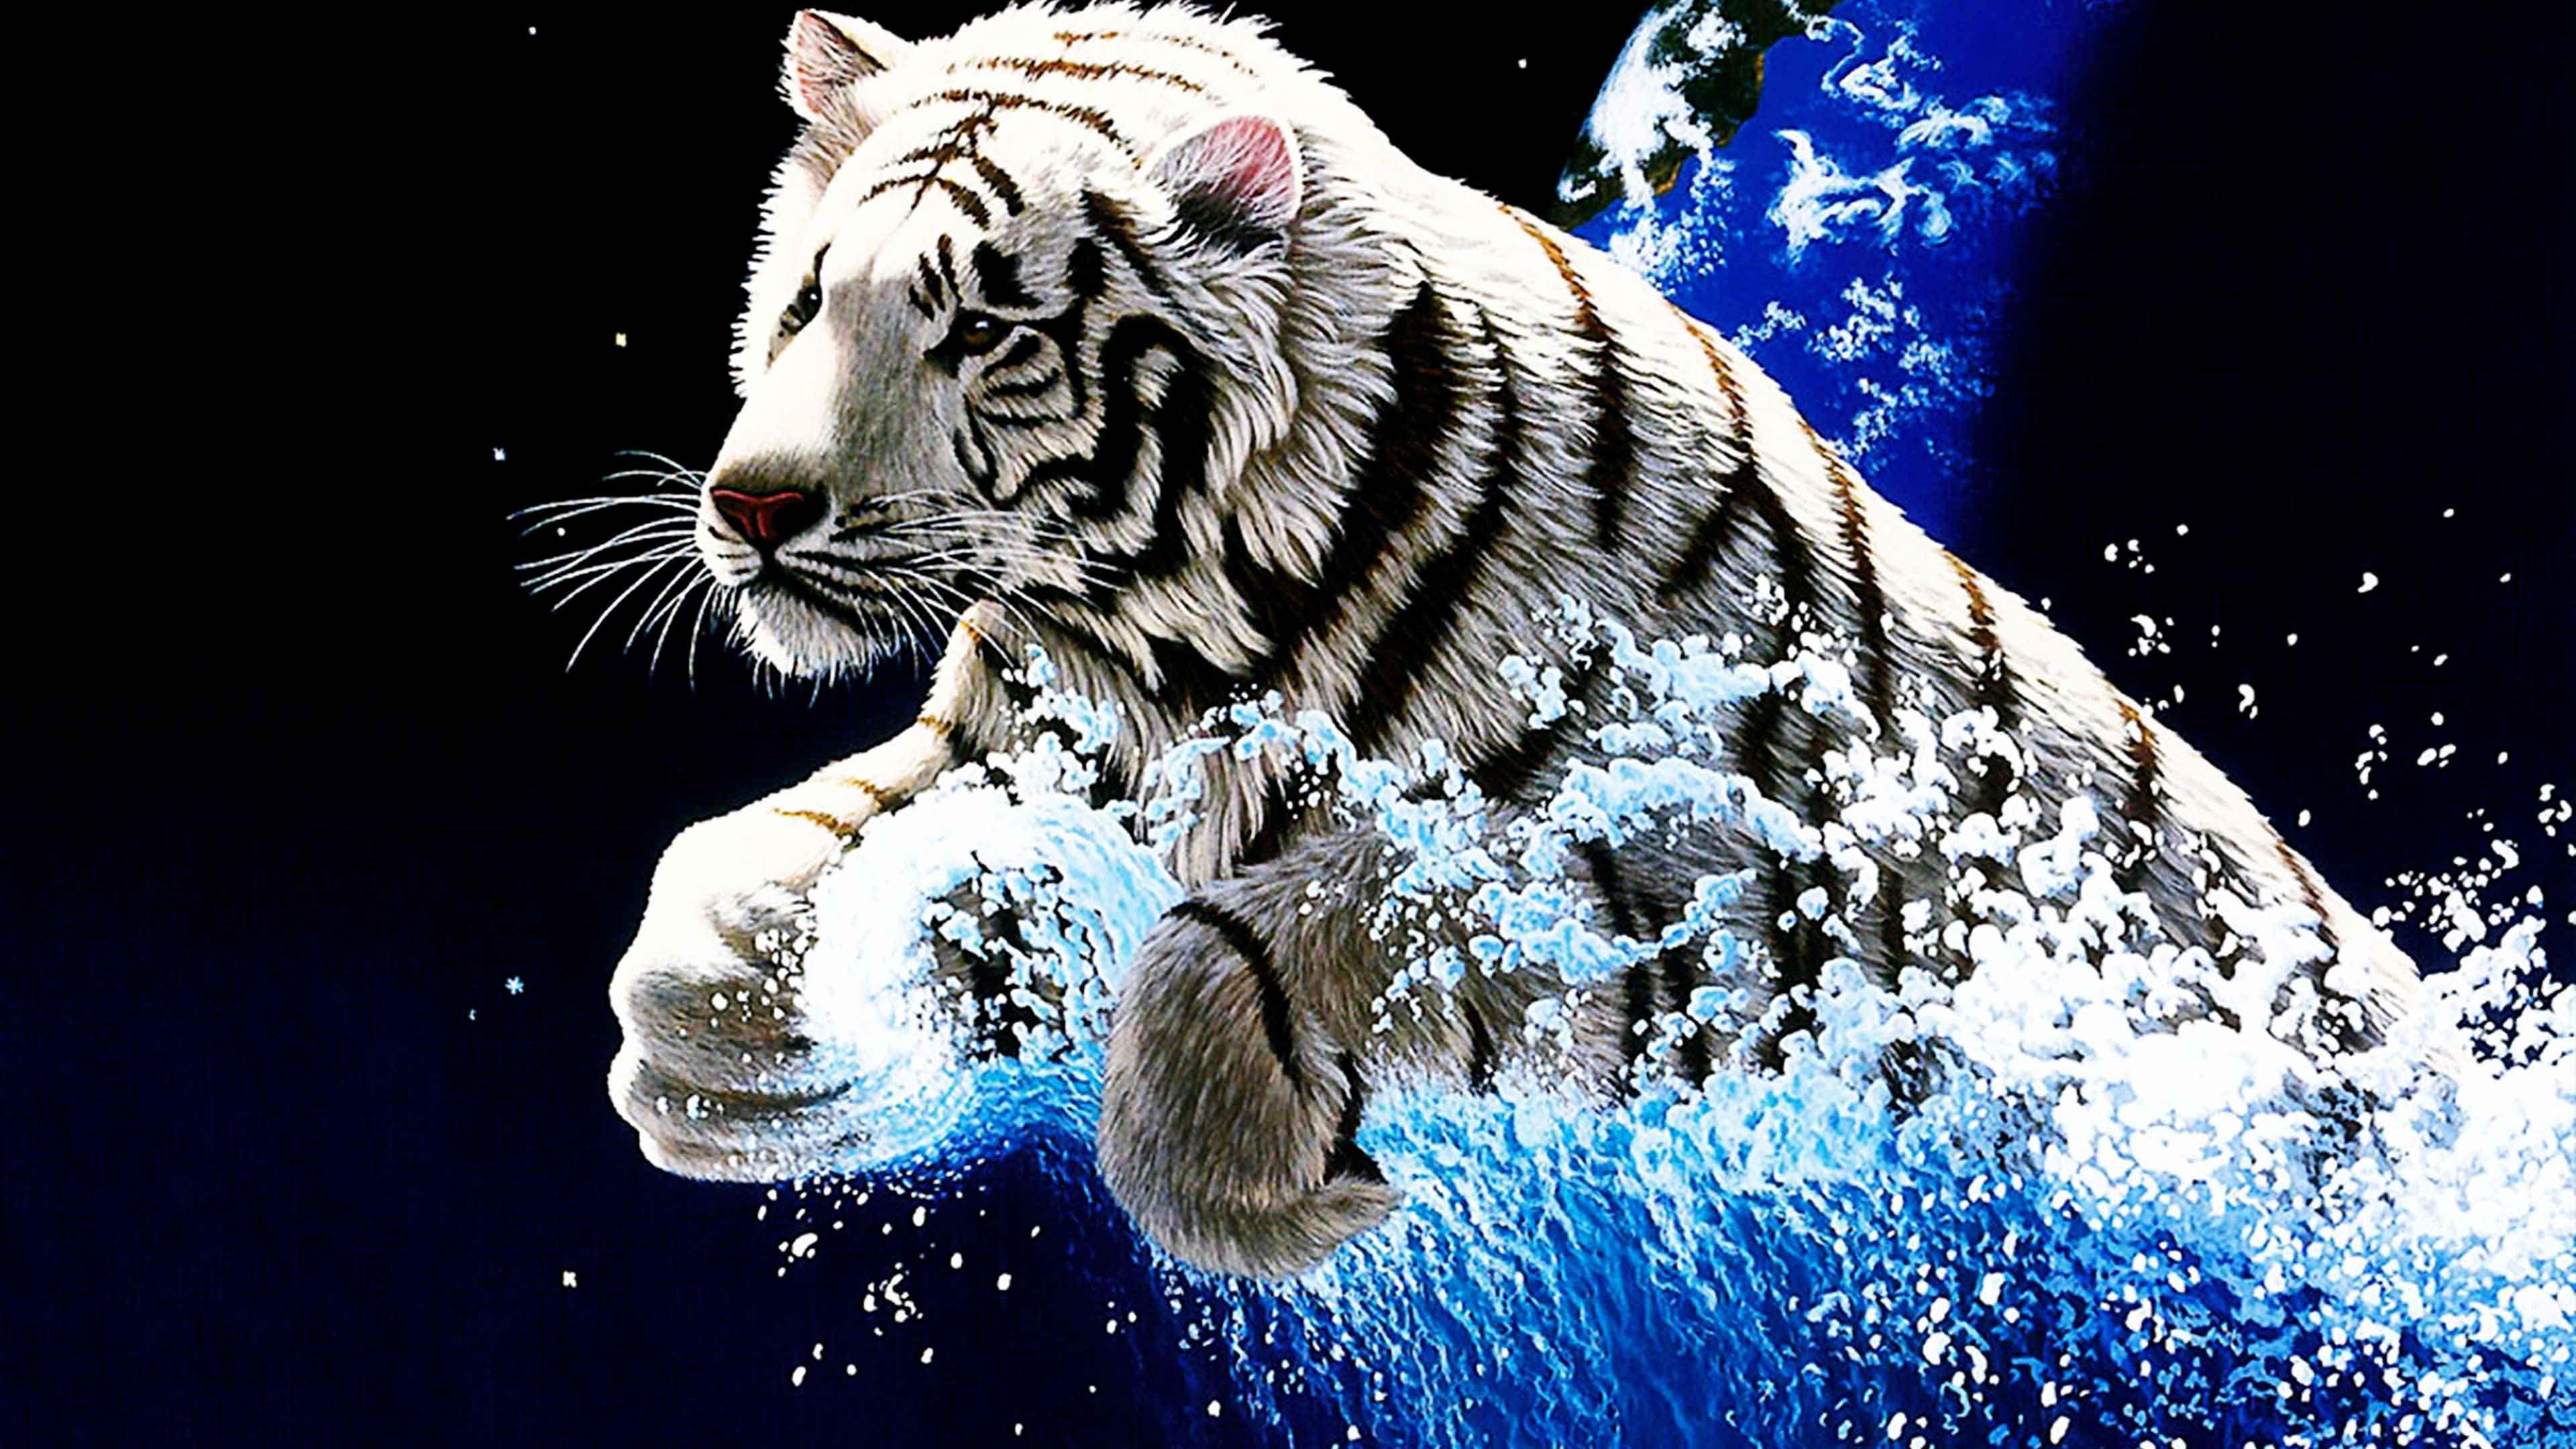 Animated 3D Tigers Wallpaper HD. Tiger wallpaper, Tiger